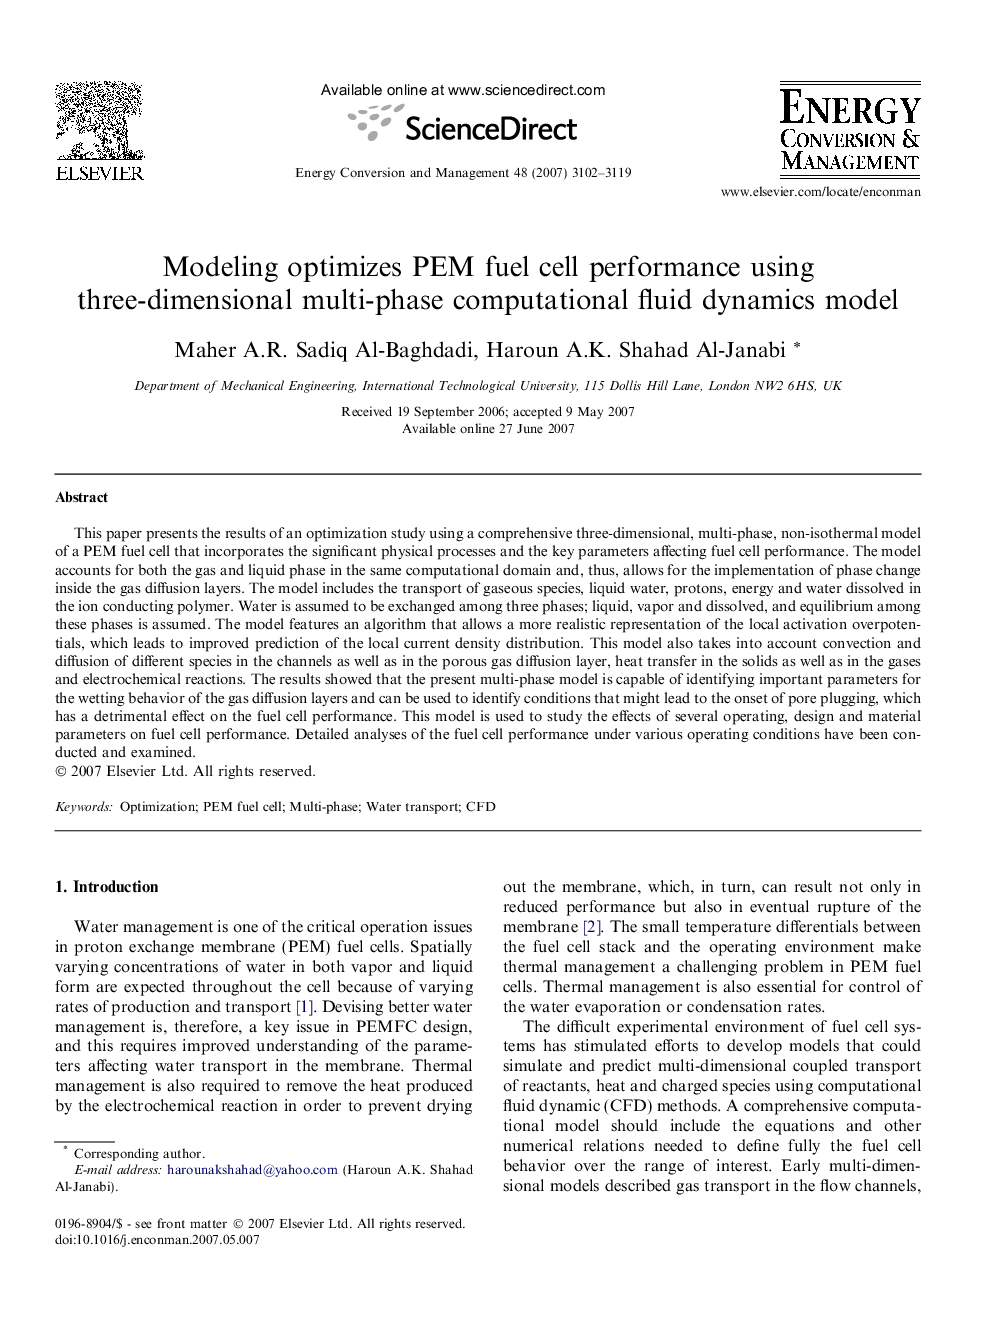 Modeling optimizes PEM fuel cell performance using three-dimensional multi-phase computational fluid dynamics model